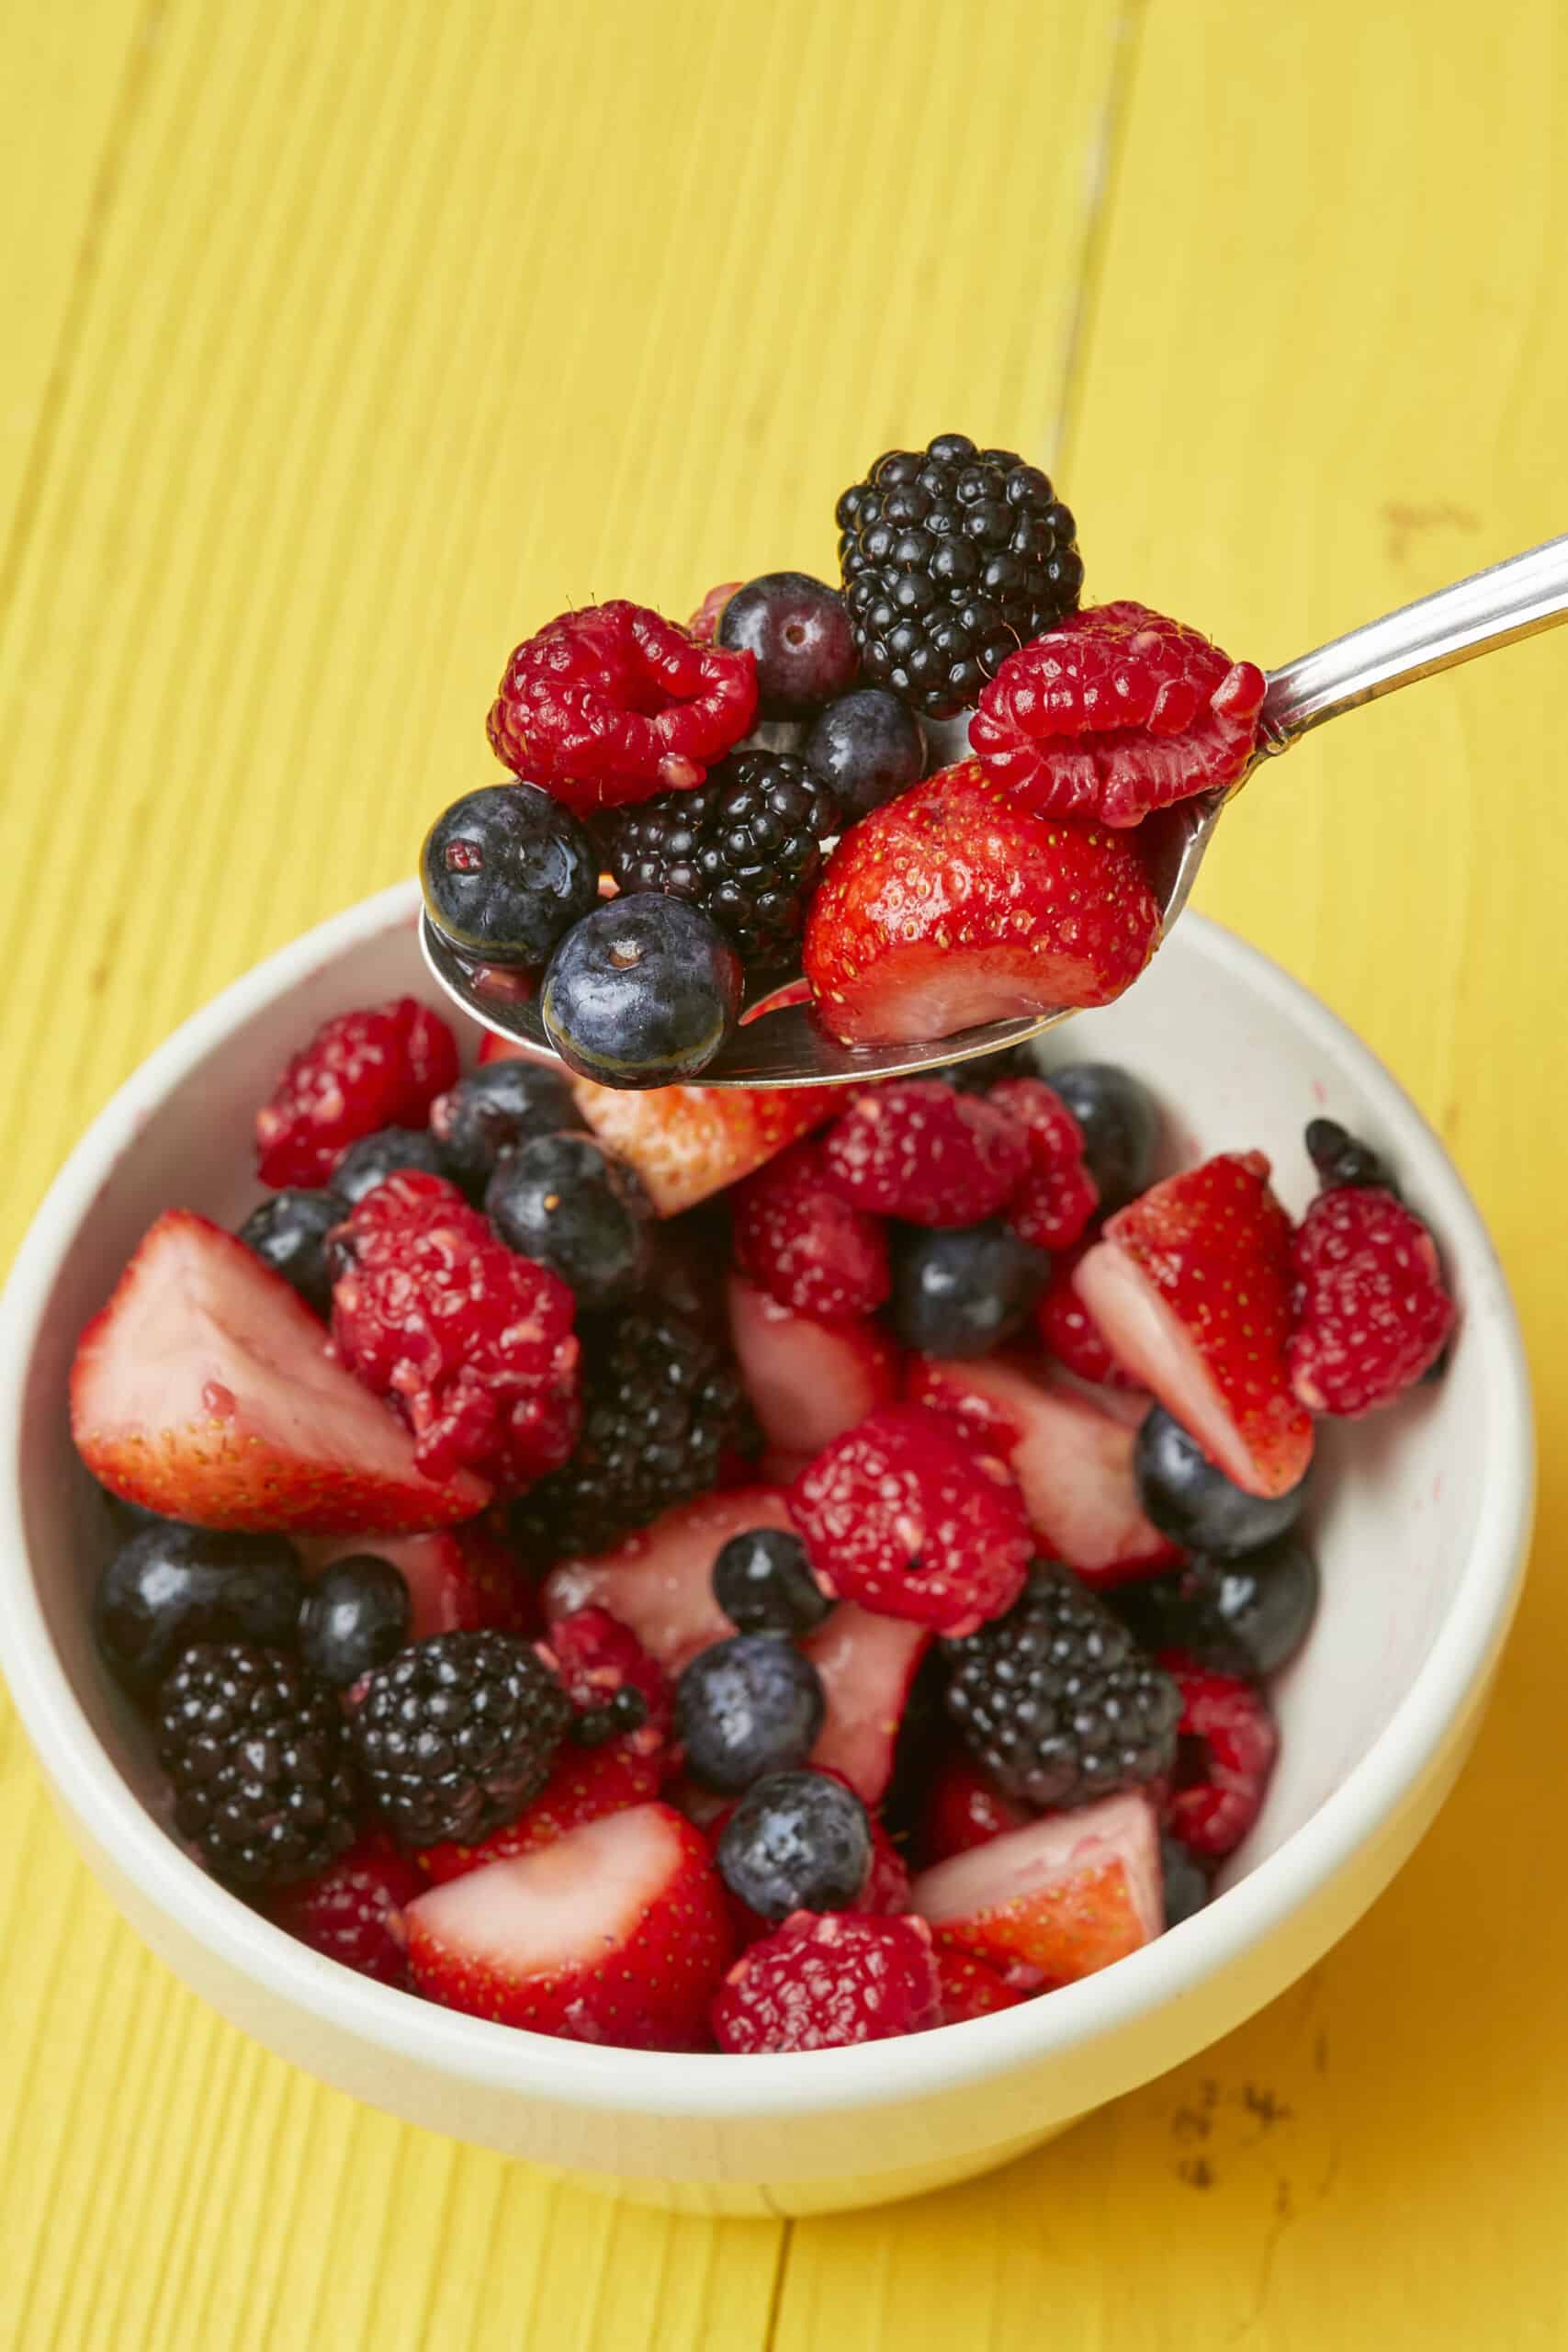 A bowl and spoonful of macerated fruit including strawberries, blueberries, blackberries, raspberries.